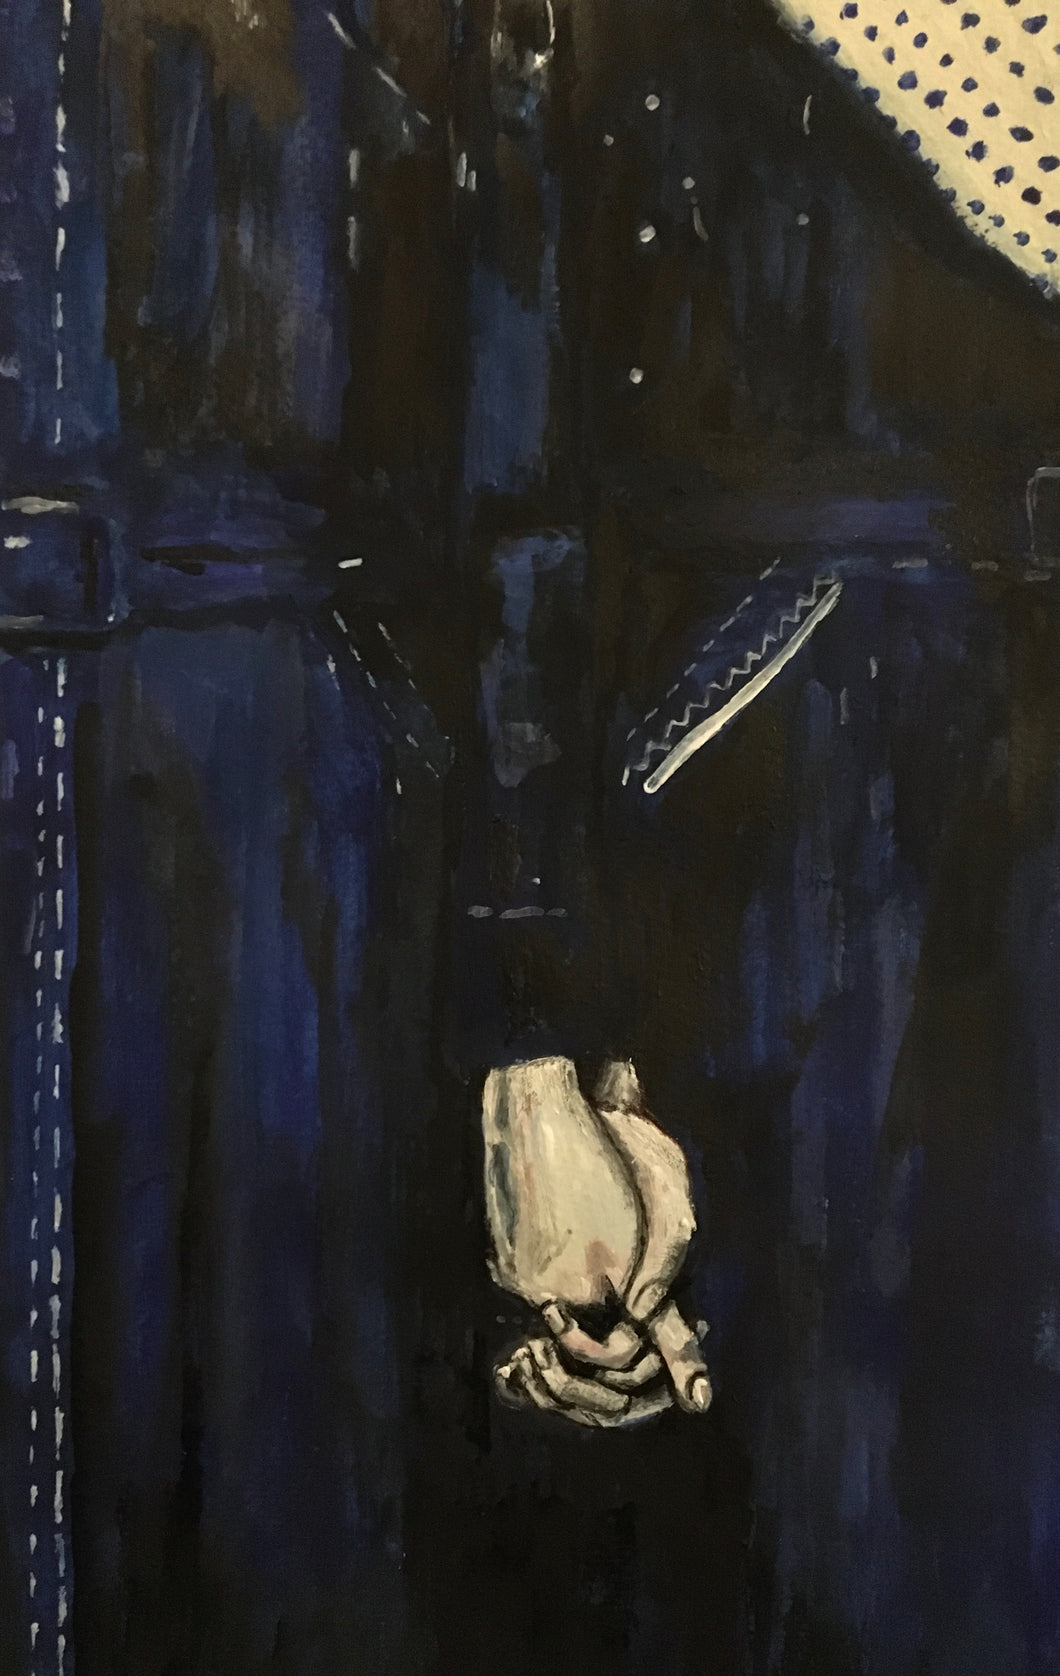 MAISON MARGIELA - 'Holding Hands'  S.W.A.L.K. II S/S ’21 painting